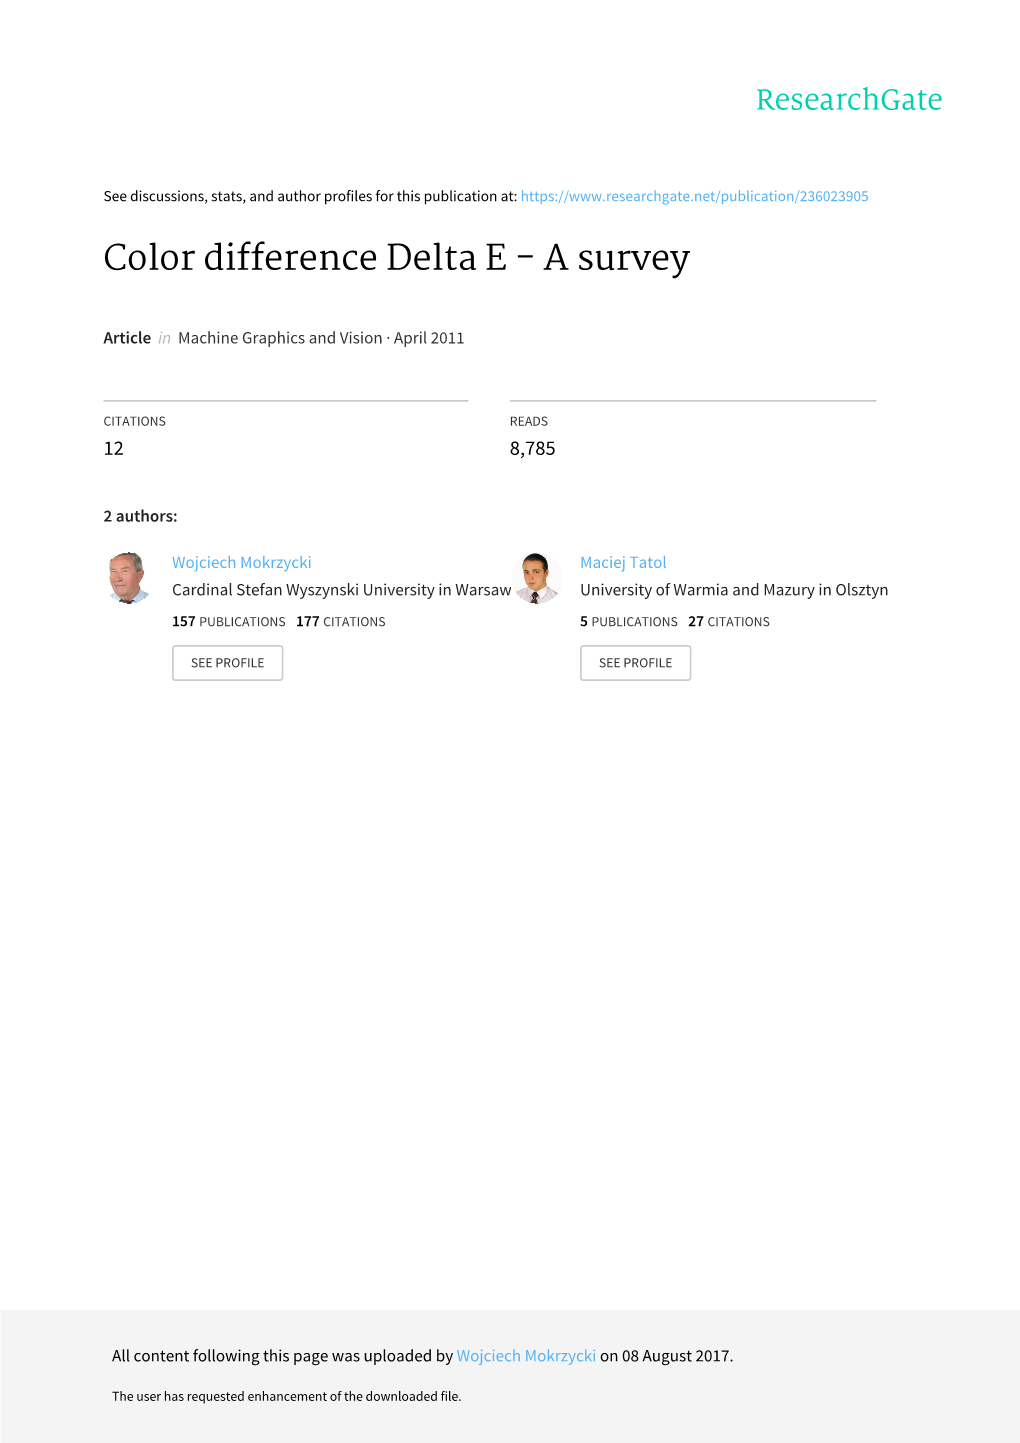 Color Difference Delta E - a Survey